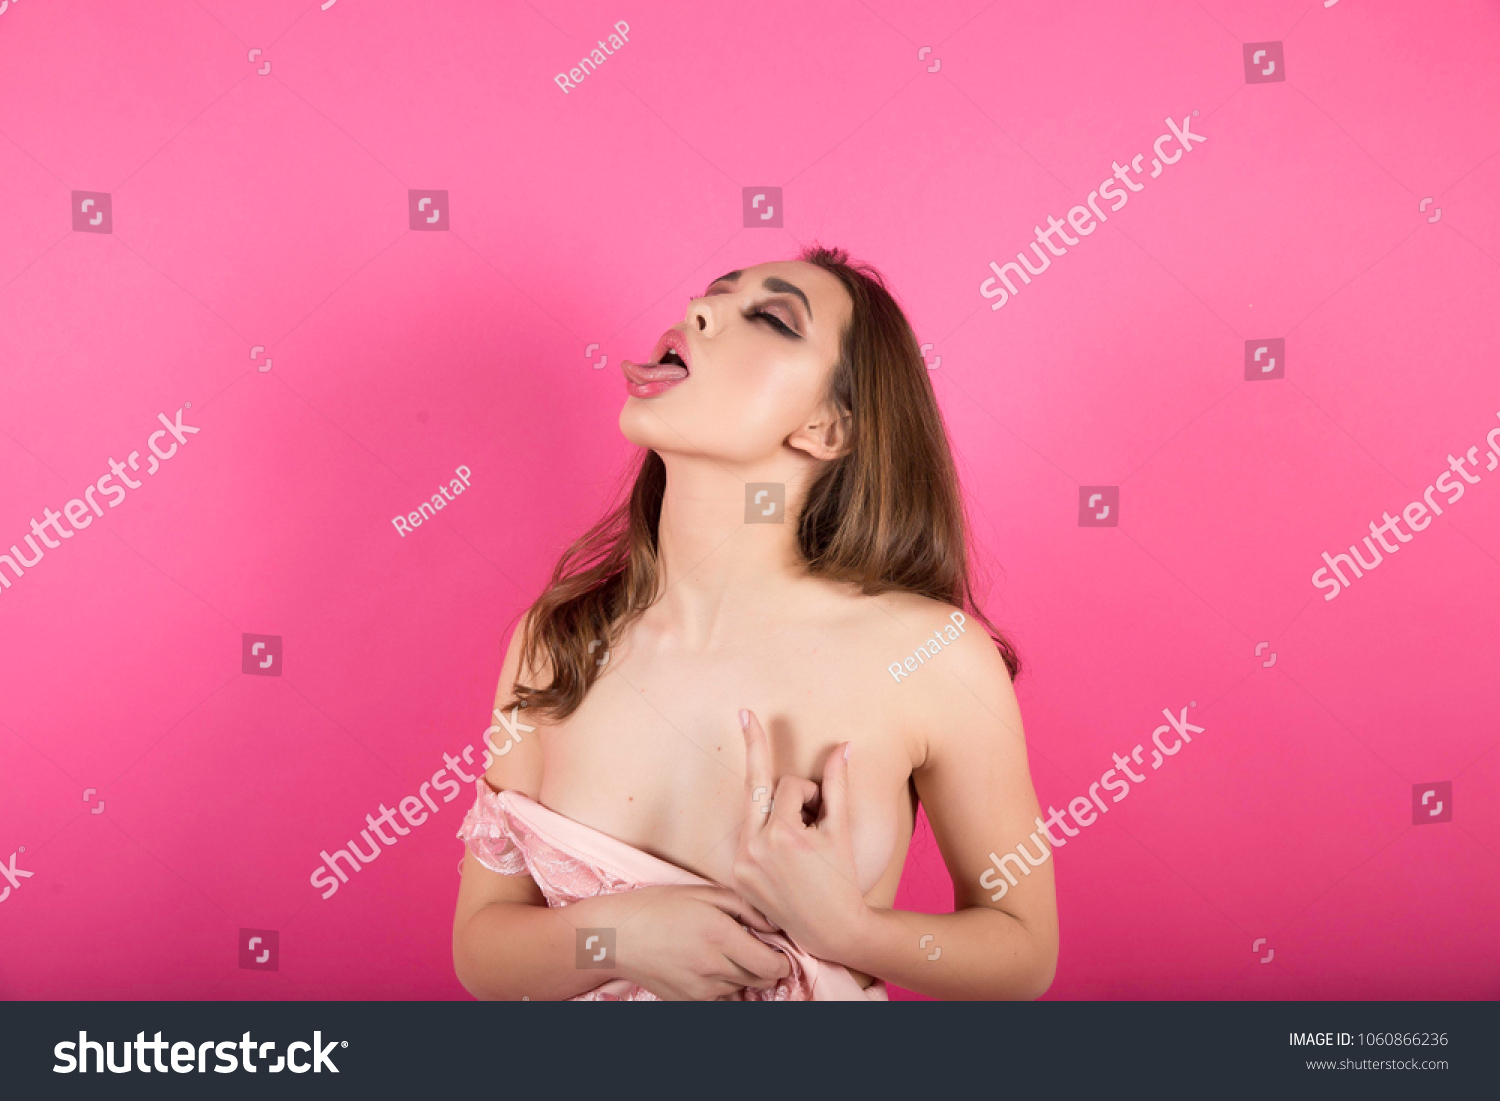 Tongue between fingers naked teen - Nude gallery